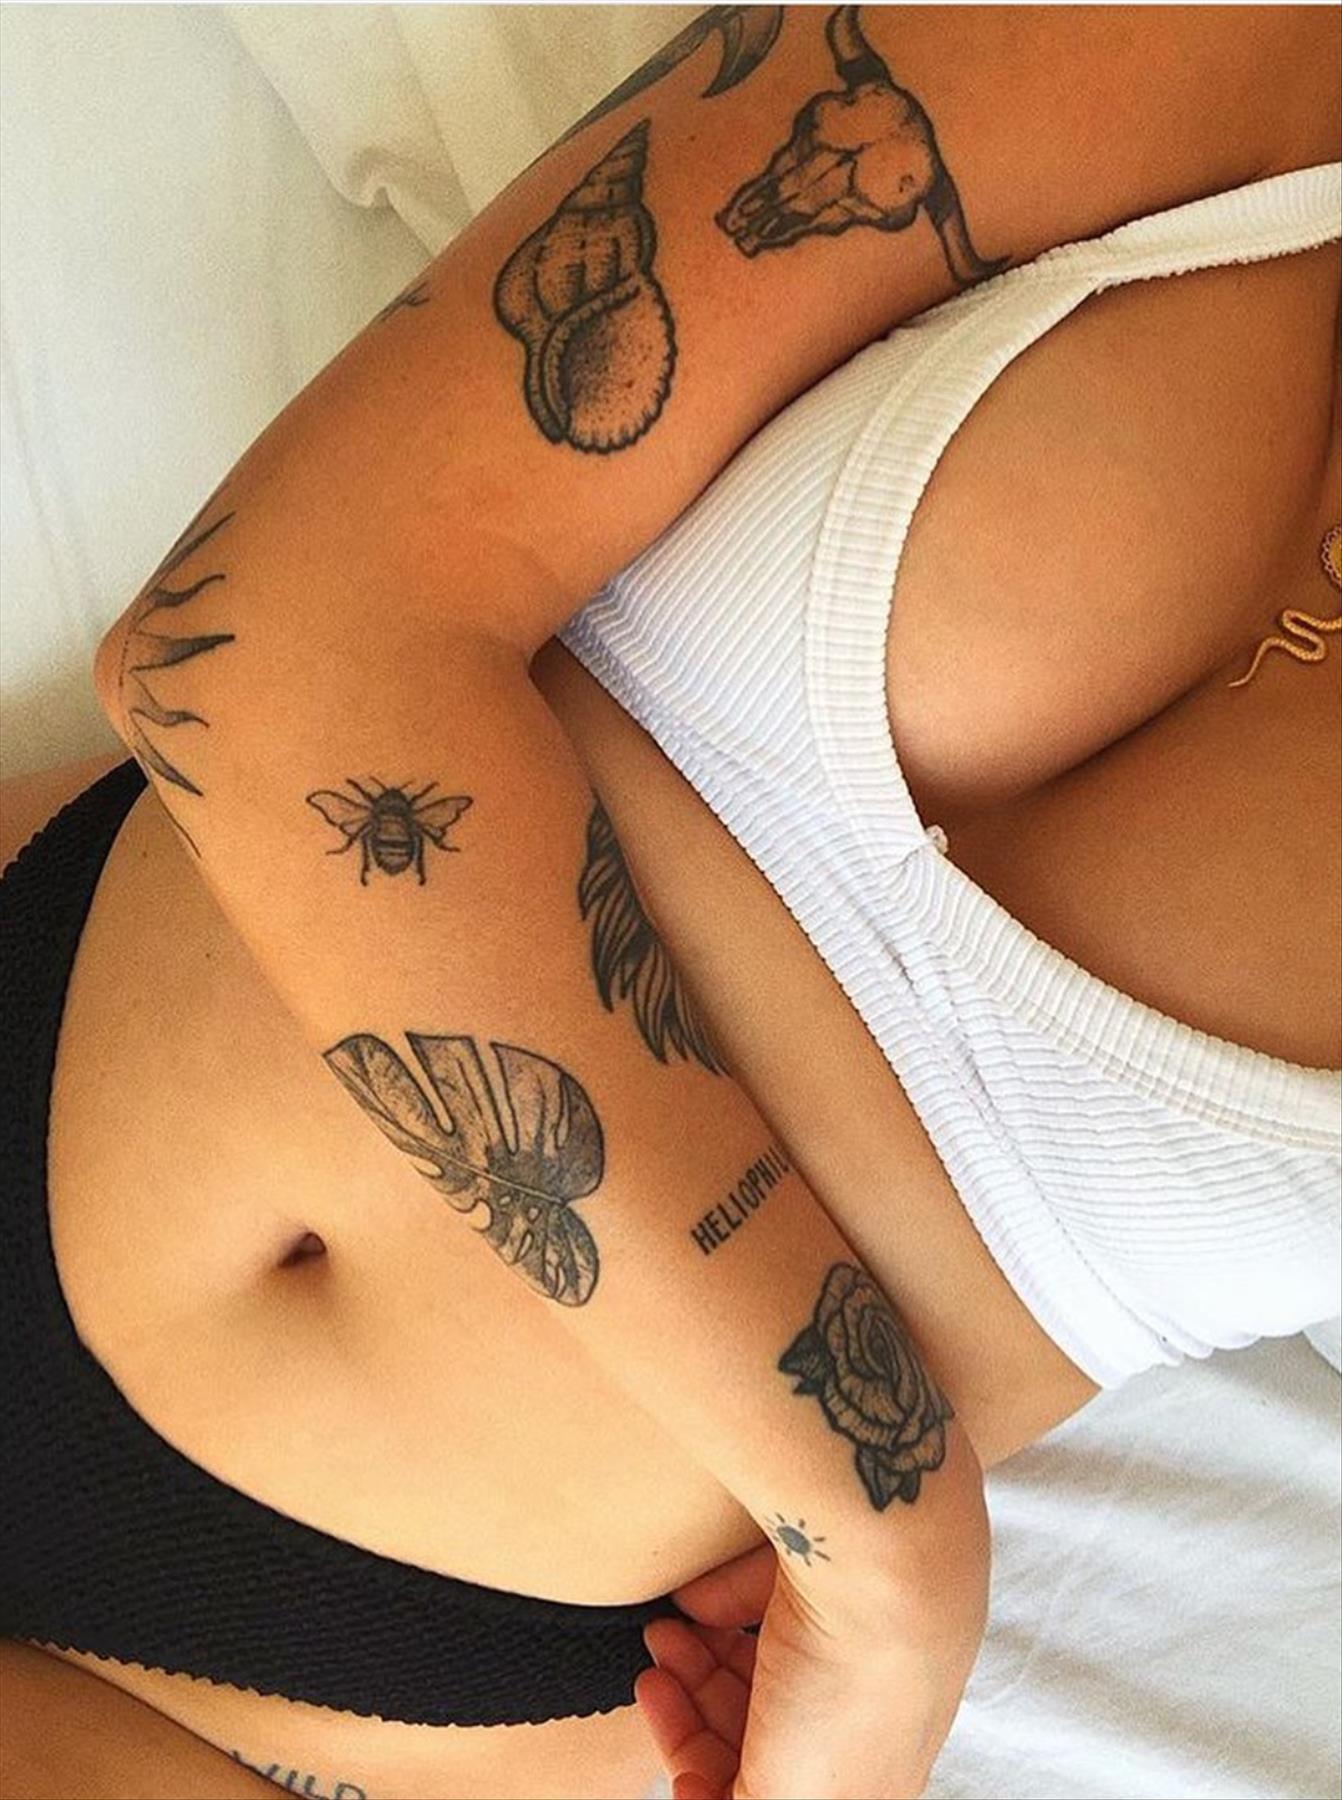 Cool Female Baddie Tattoos Design To Be Hot Girls